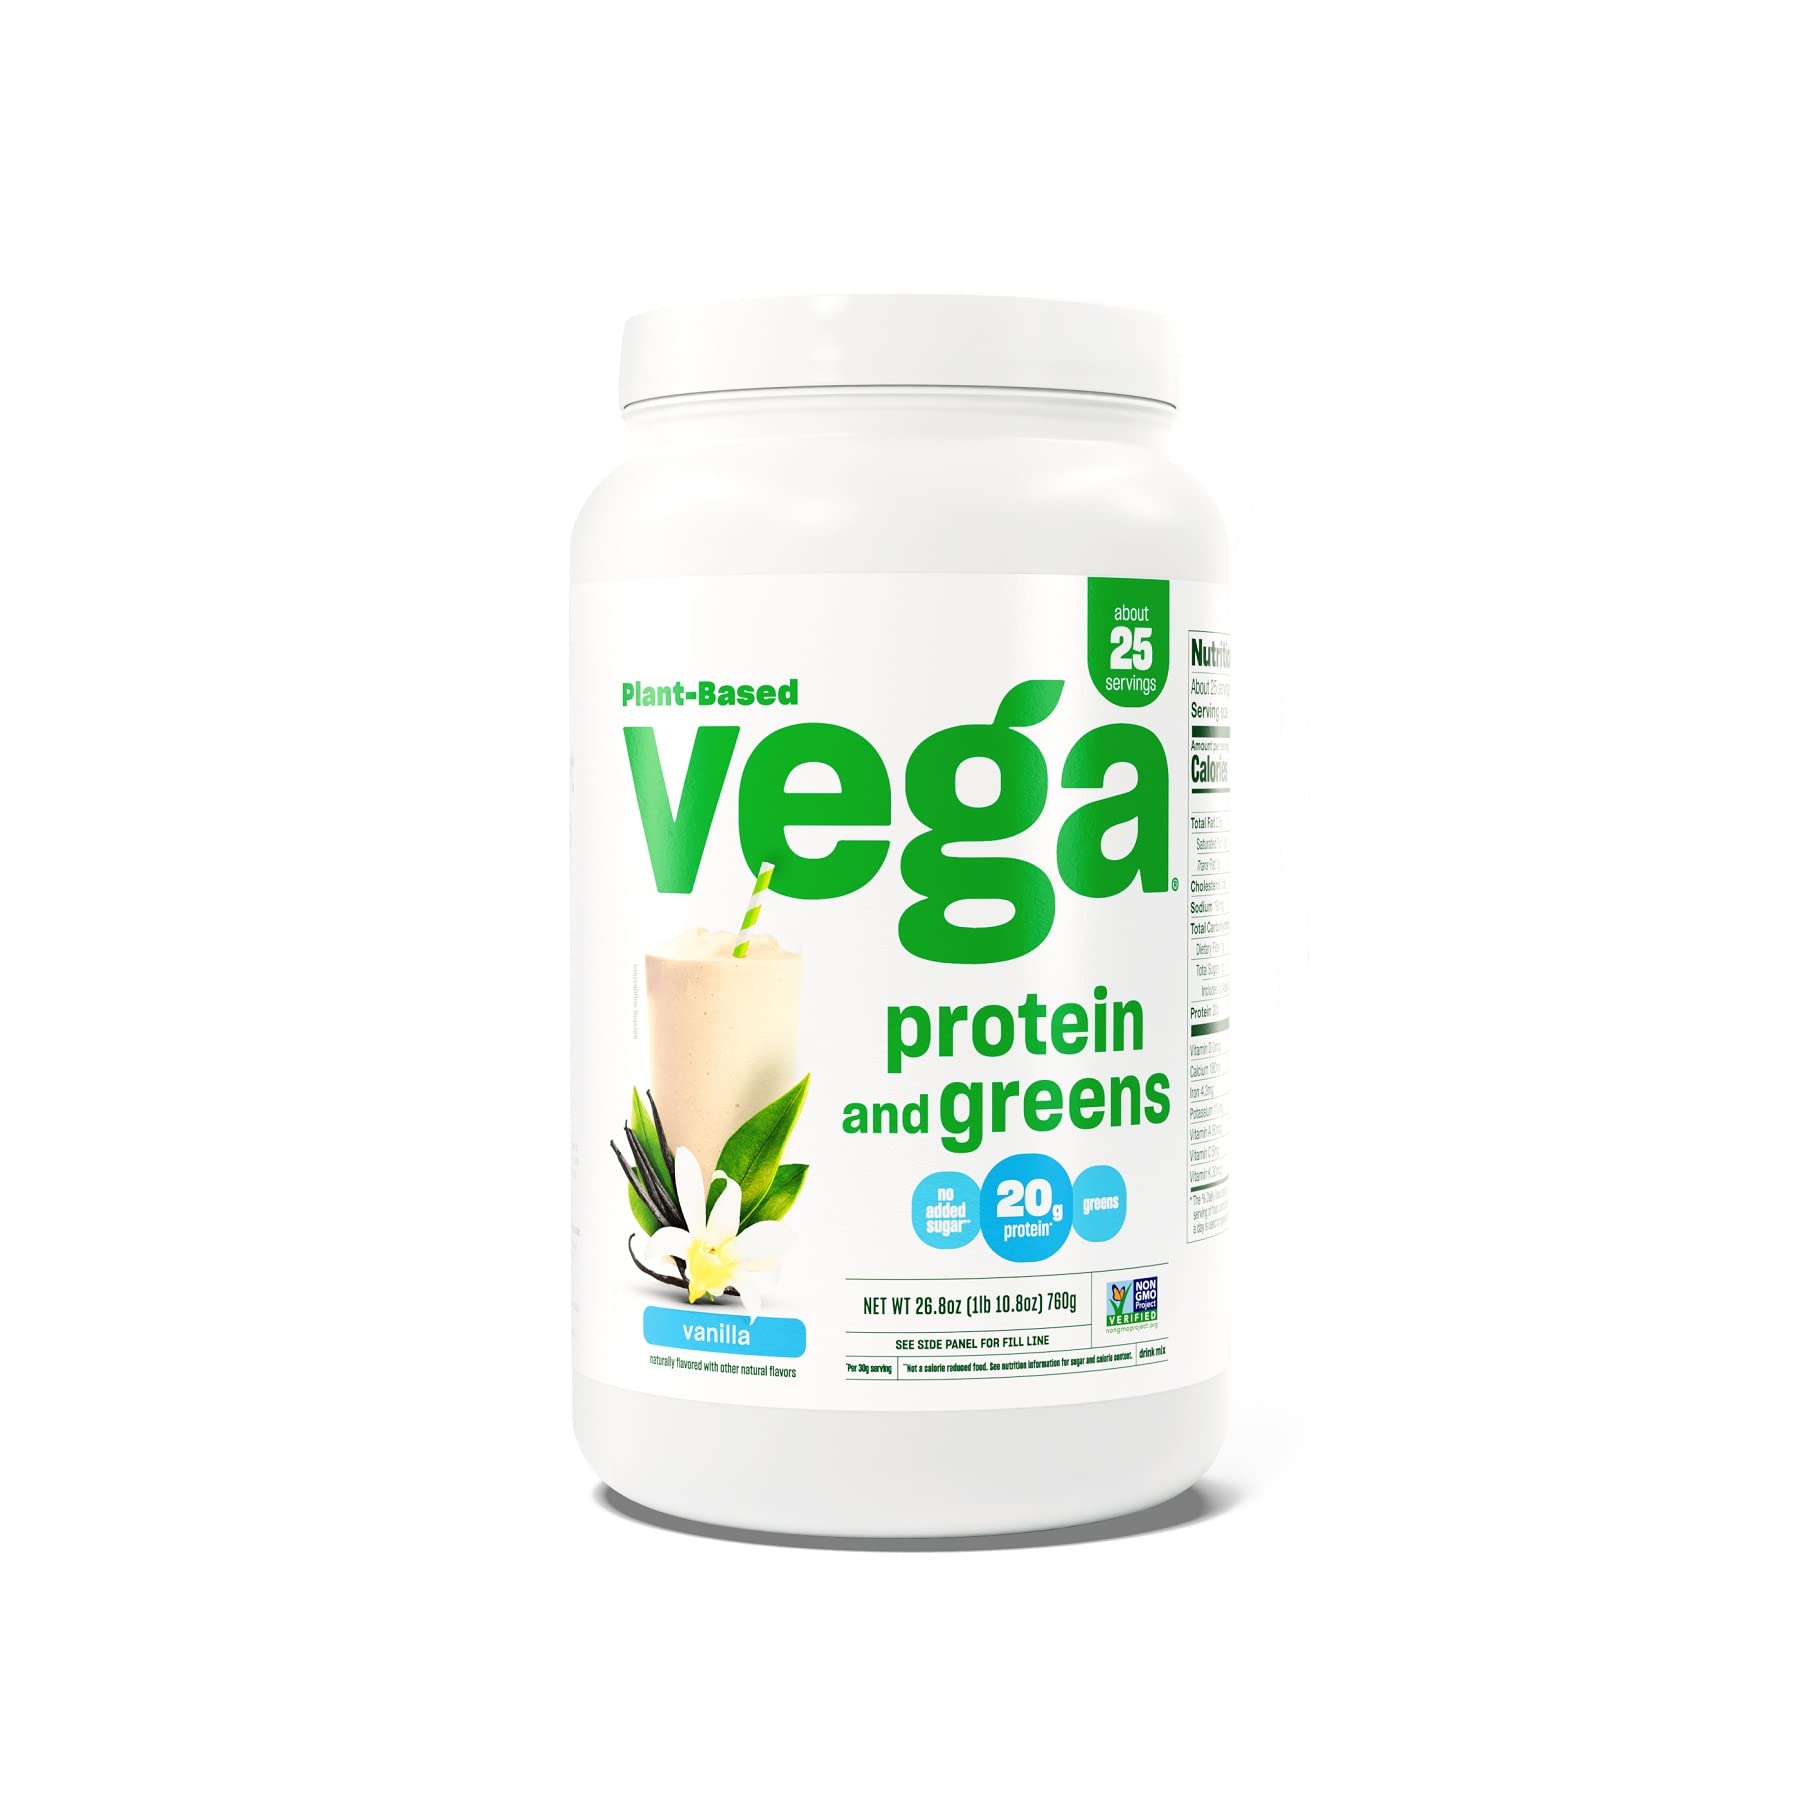 Vega Protein and Greens, Plant Based Protein Powder Plus Veggies n Protein Powder, KetoFriendly, Vegetarian (25 Servings, 26.8 Oz Tub)